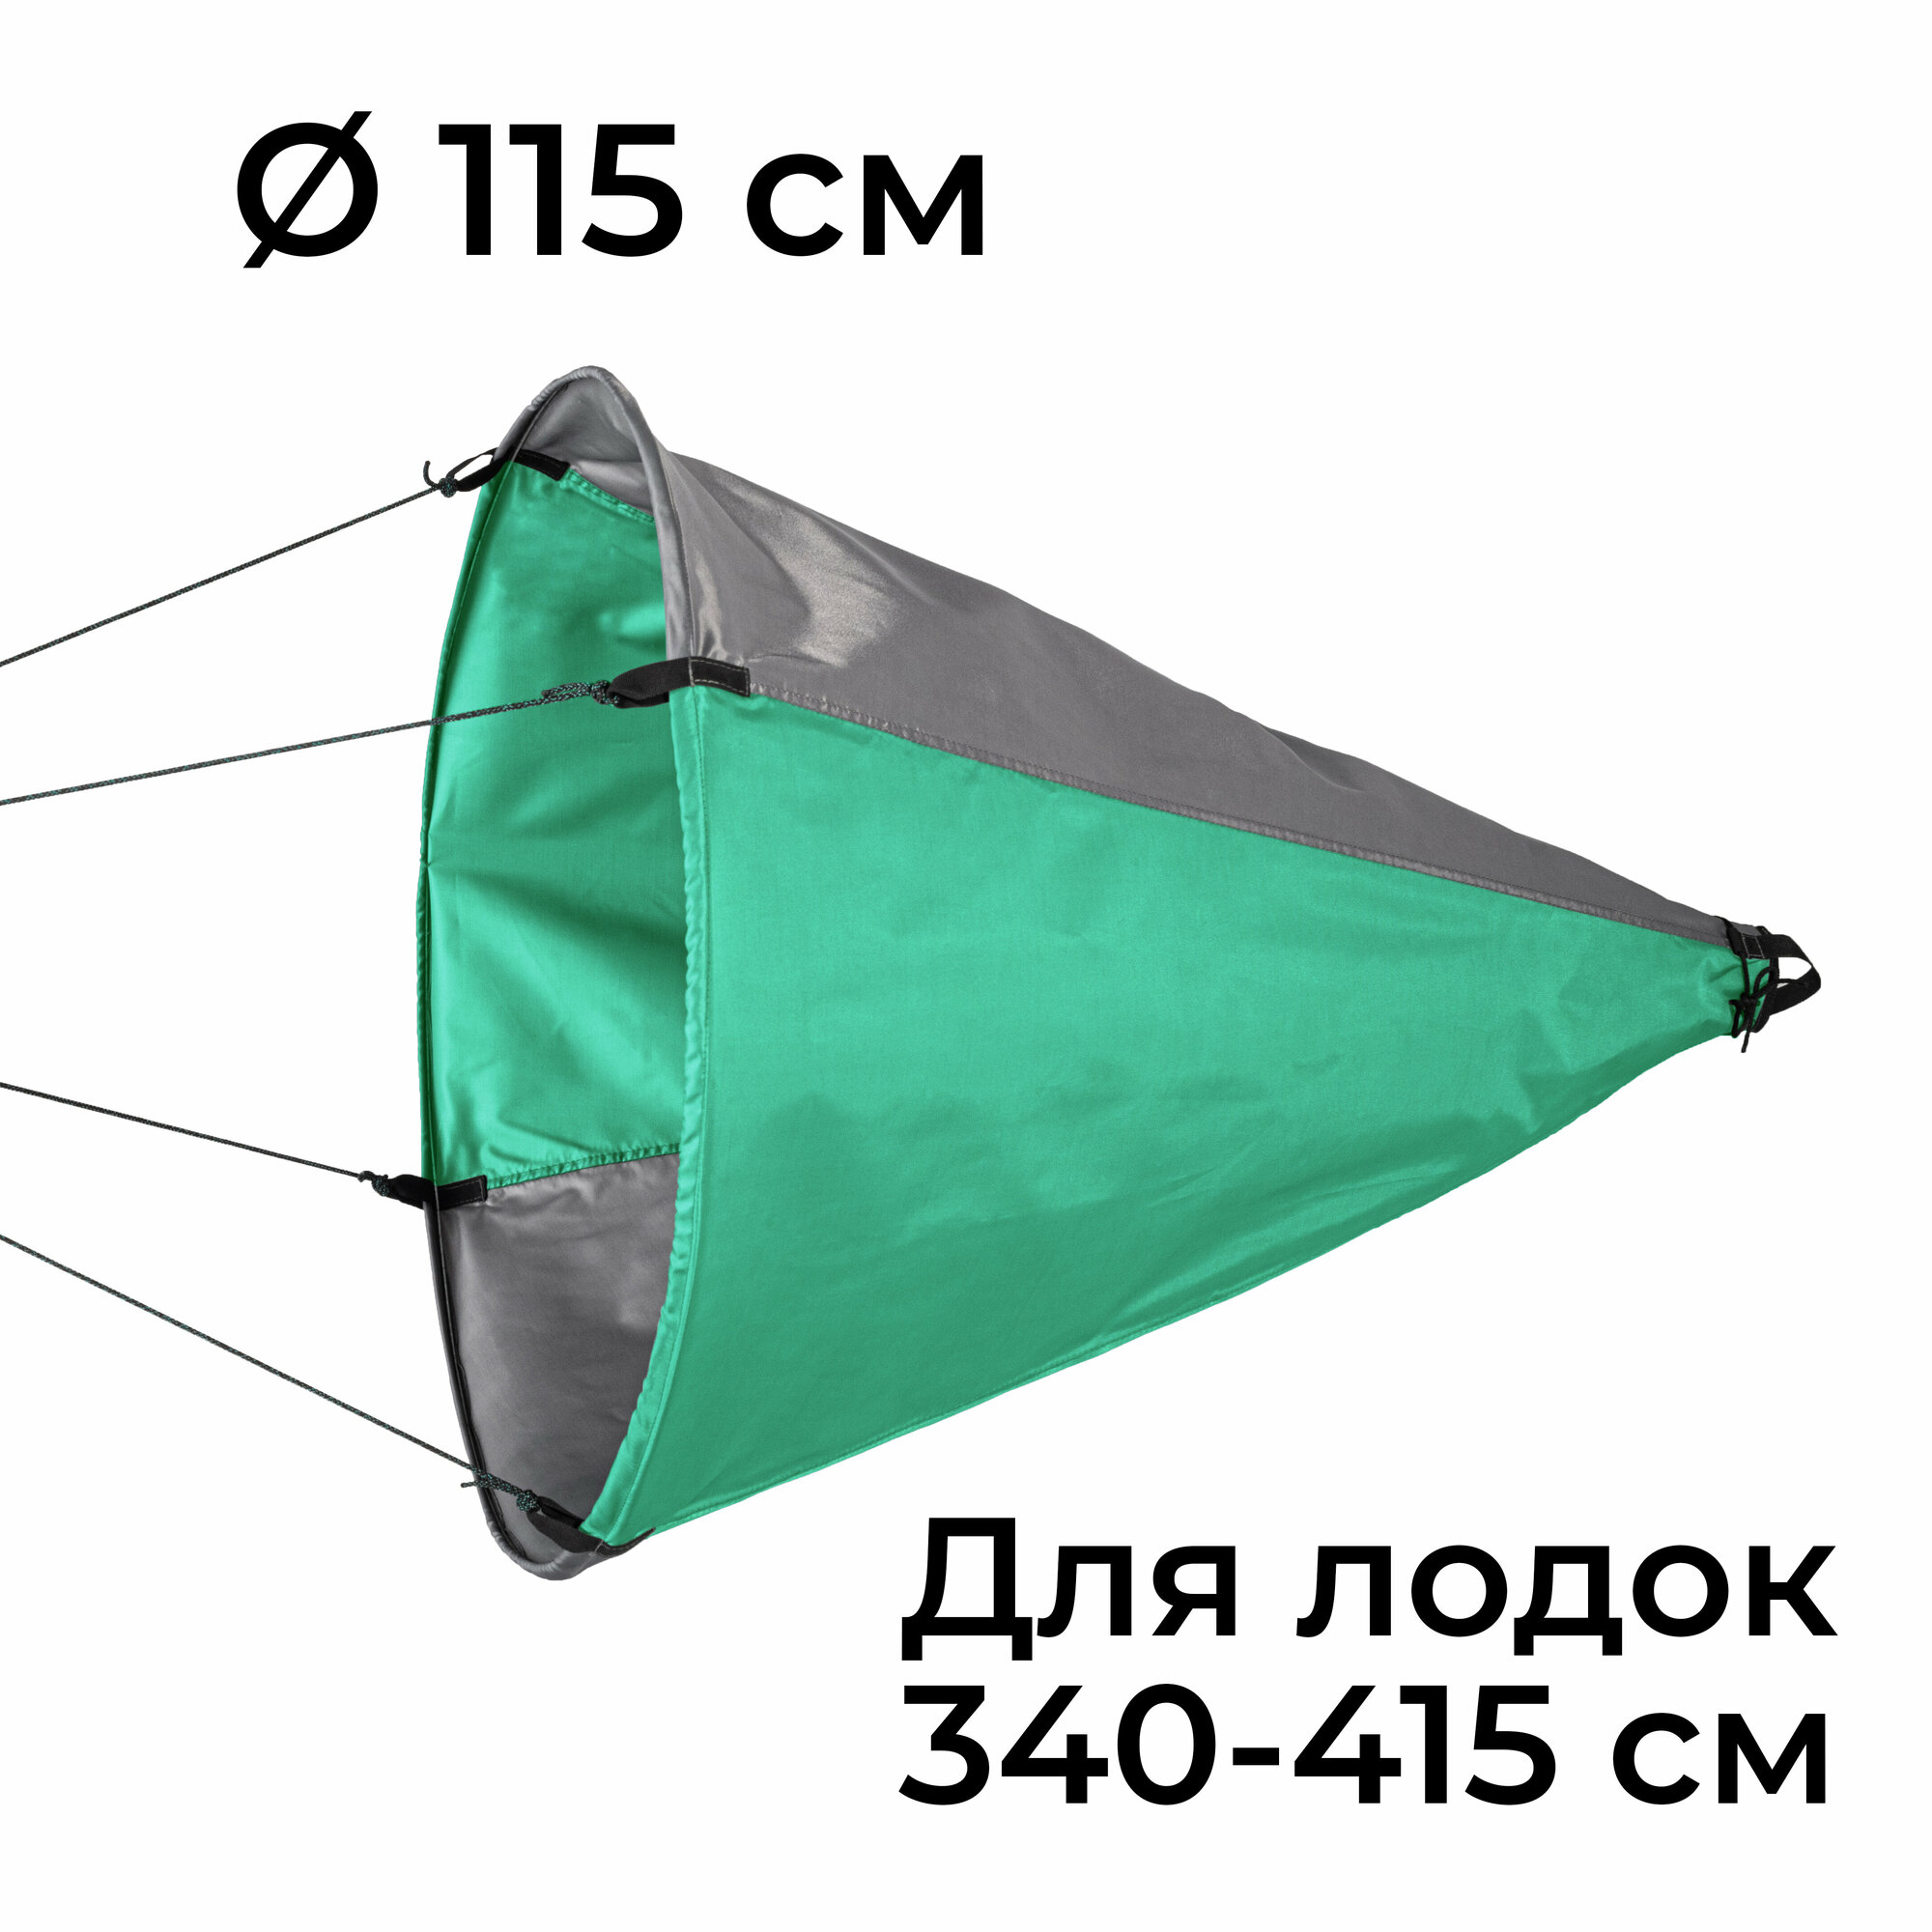 Плавучий якорь-парашют "Фролыч" Ø 115 см для лодок от 3,4 до 4,15 м длиной зелено-серый